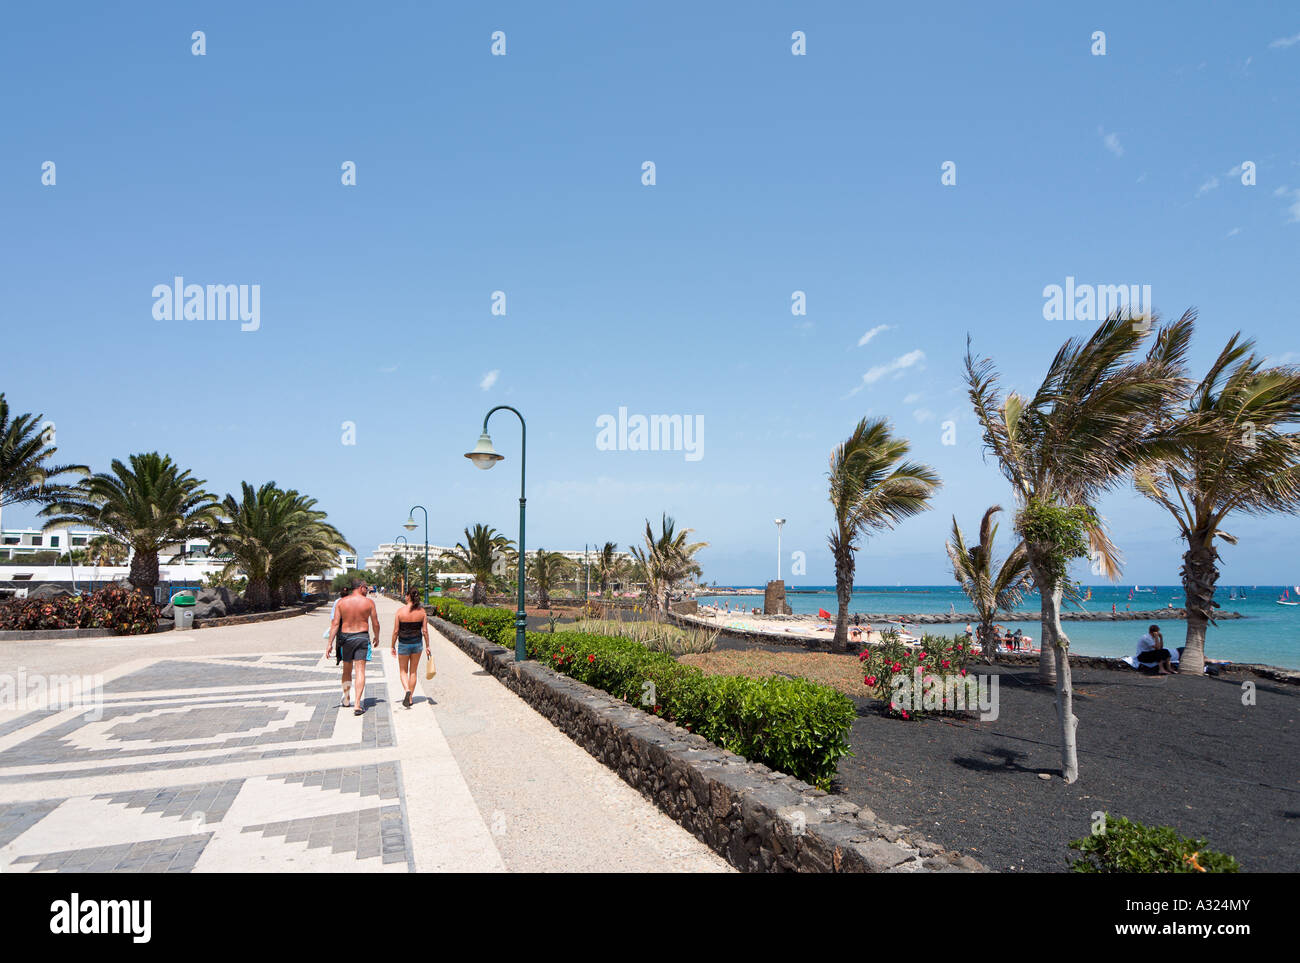 Paar zu Fuß entlang der Promenade am Strand von Playa de Las Cucharas, Costa Teguise, Lanzarote, Kanarische Inseln, Spanien Stockfoto